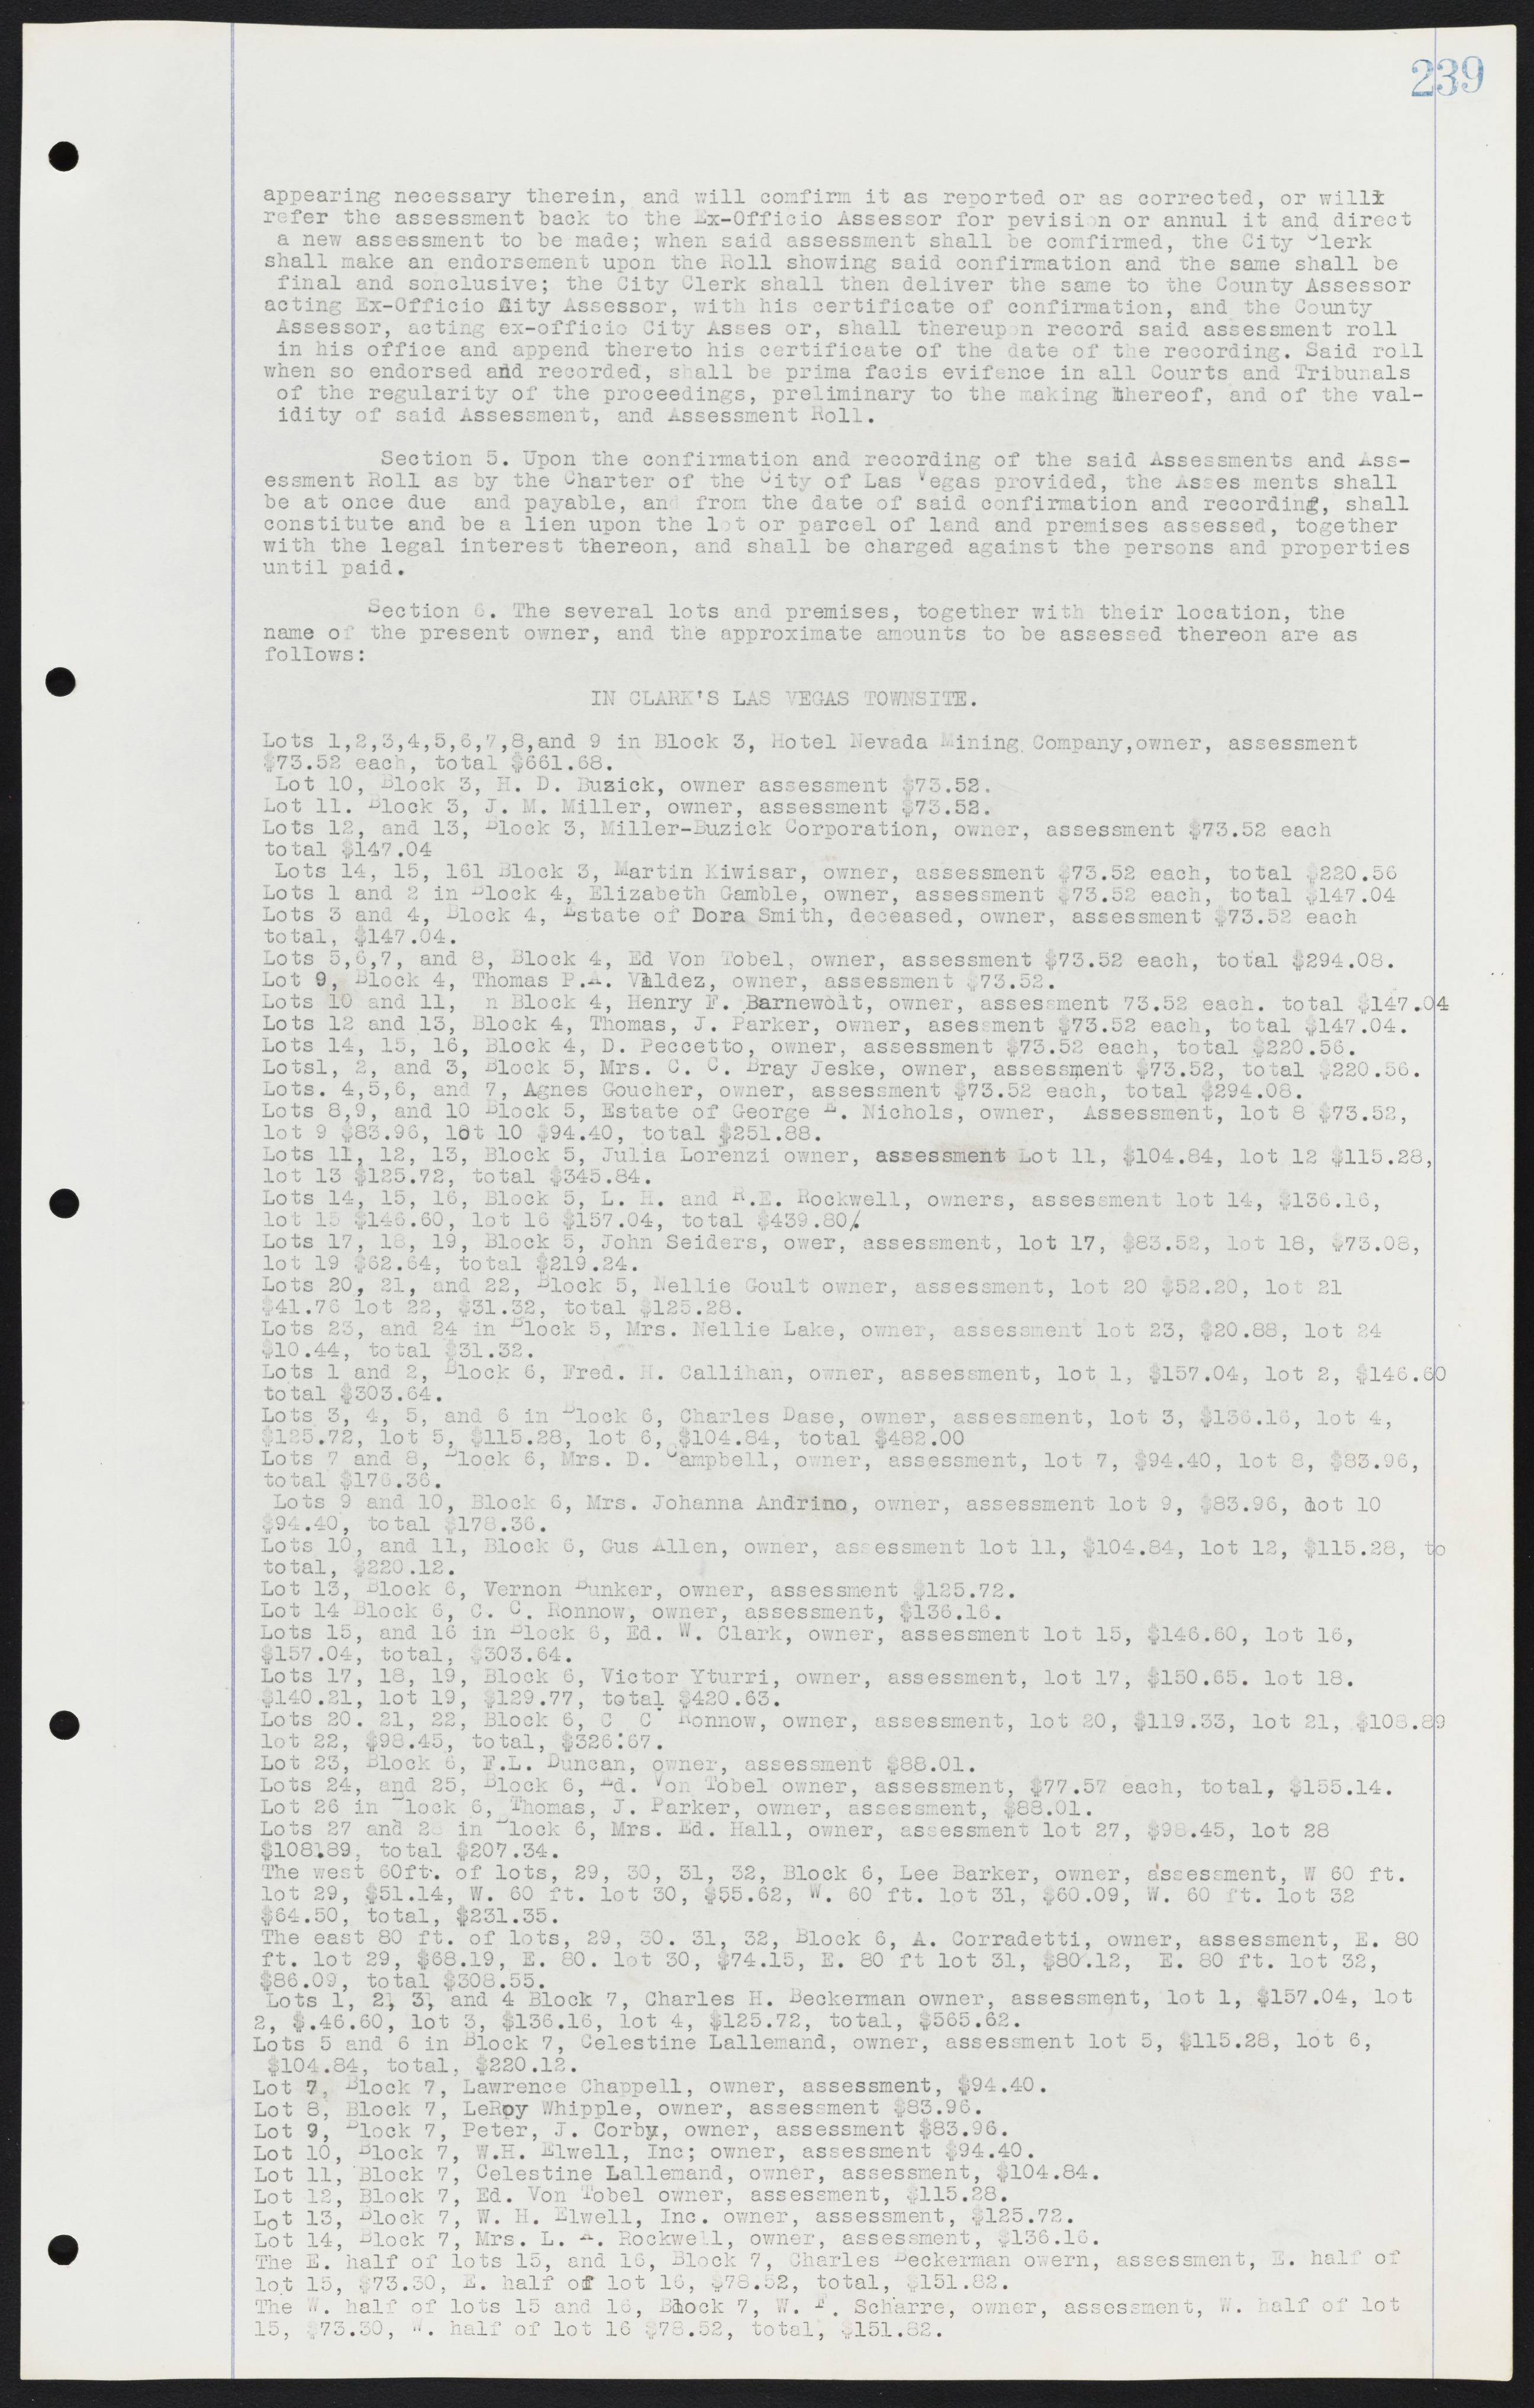 Las Vegas City Ordinances, July 18, 1911 to March 31, 1933, lvc000013-243